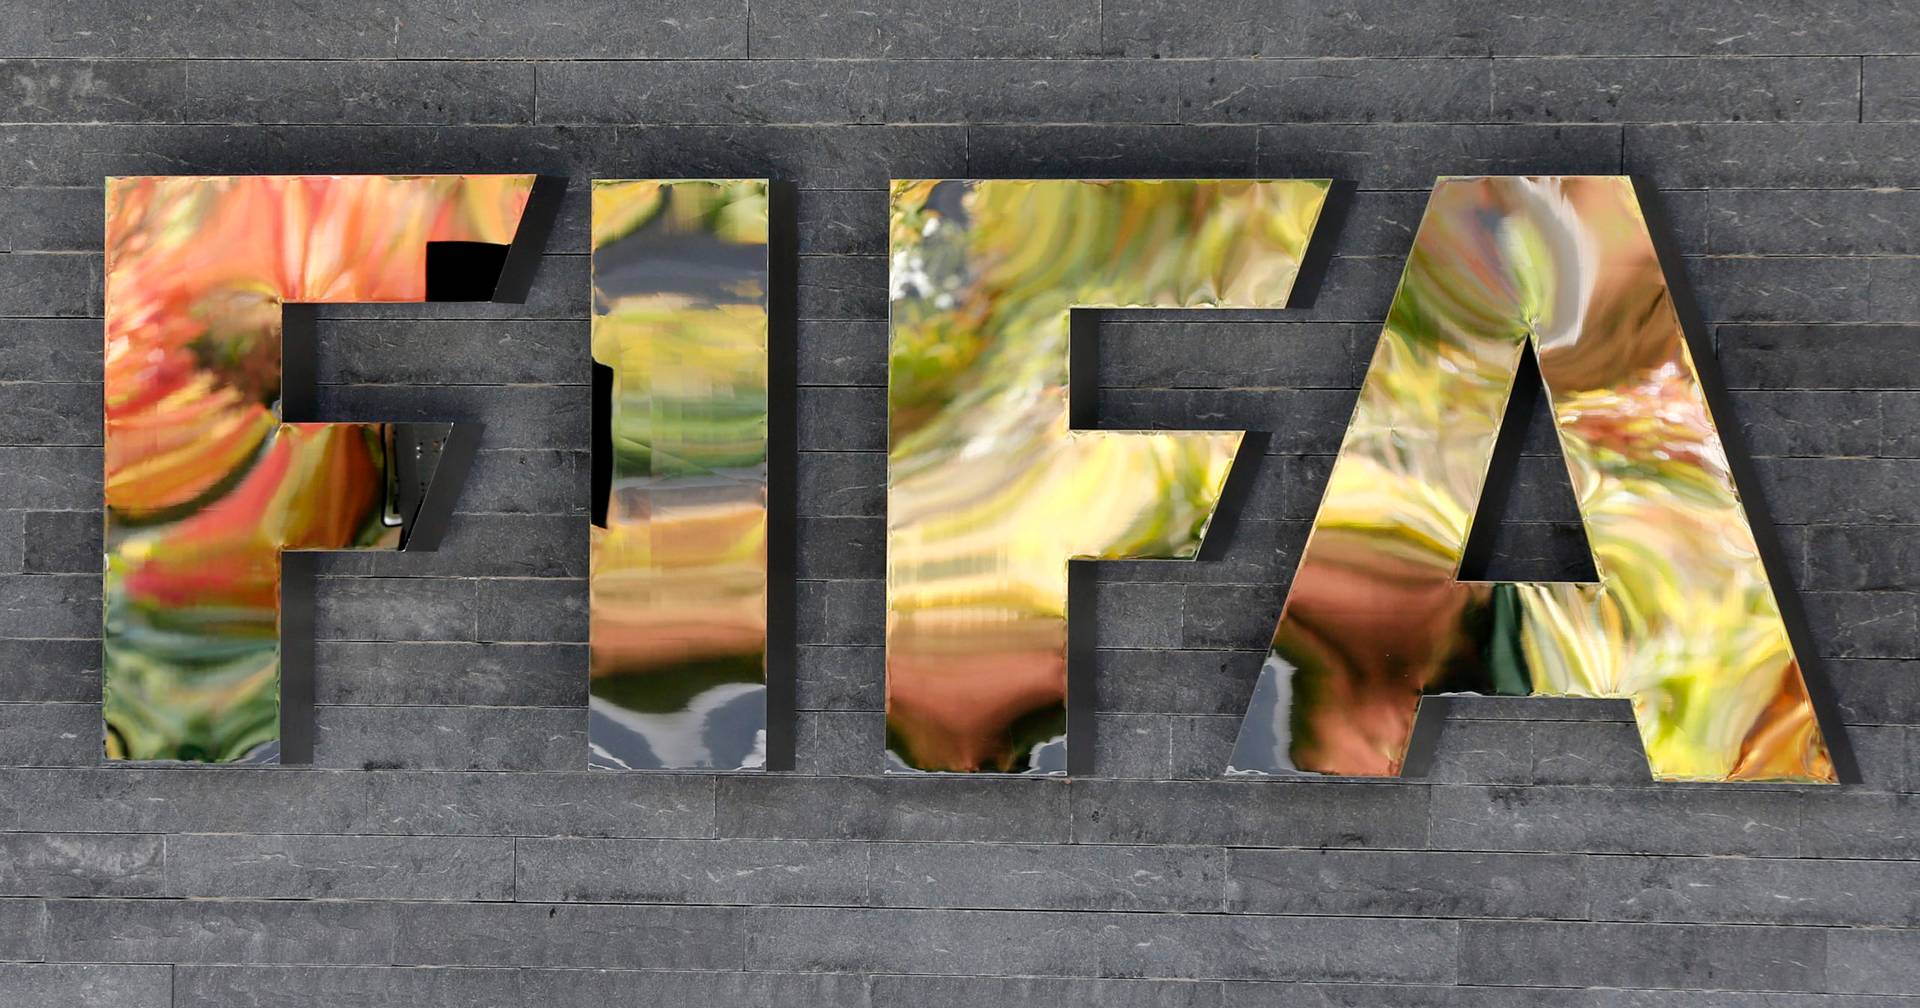 Chile apela a FIFA contra decisión de mantener a Ecuador en el Mundial